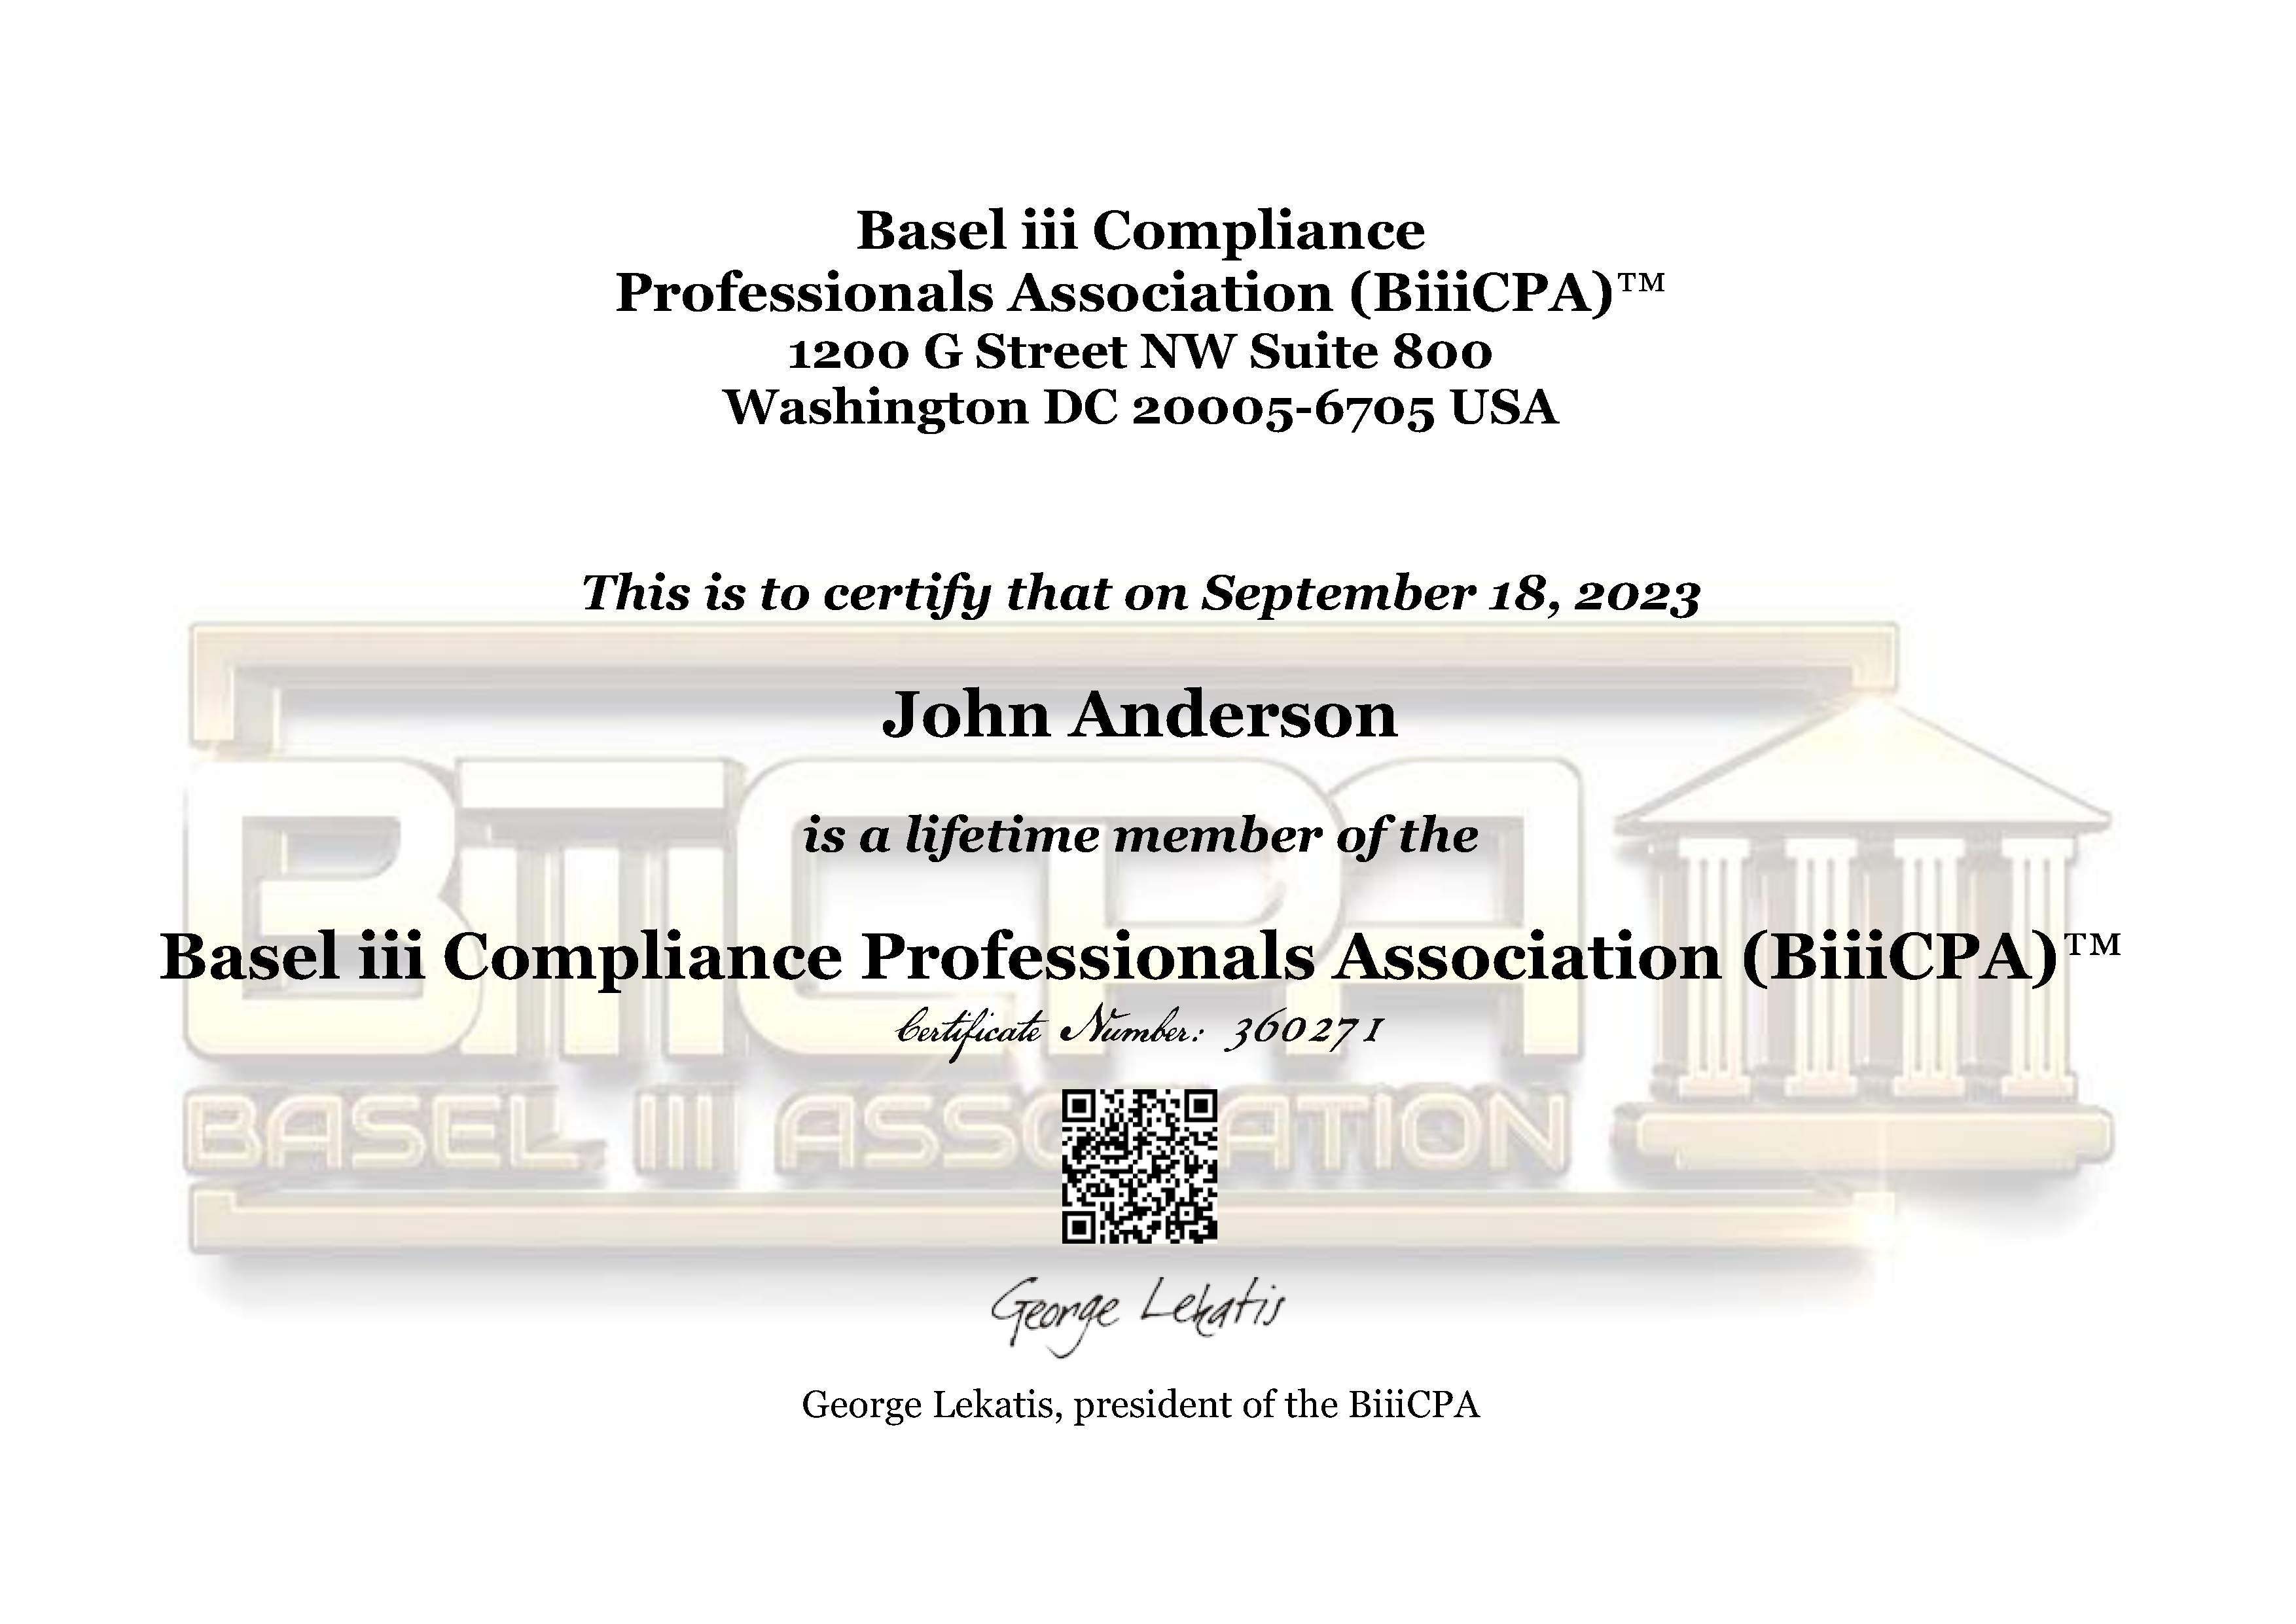 Lifetime member of the Basel iii Compliance Professionals Association (BiiiCPA)